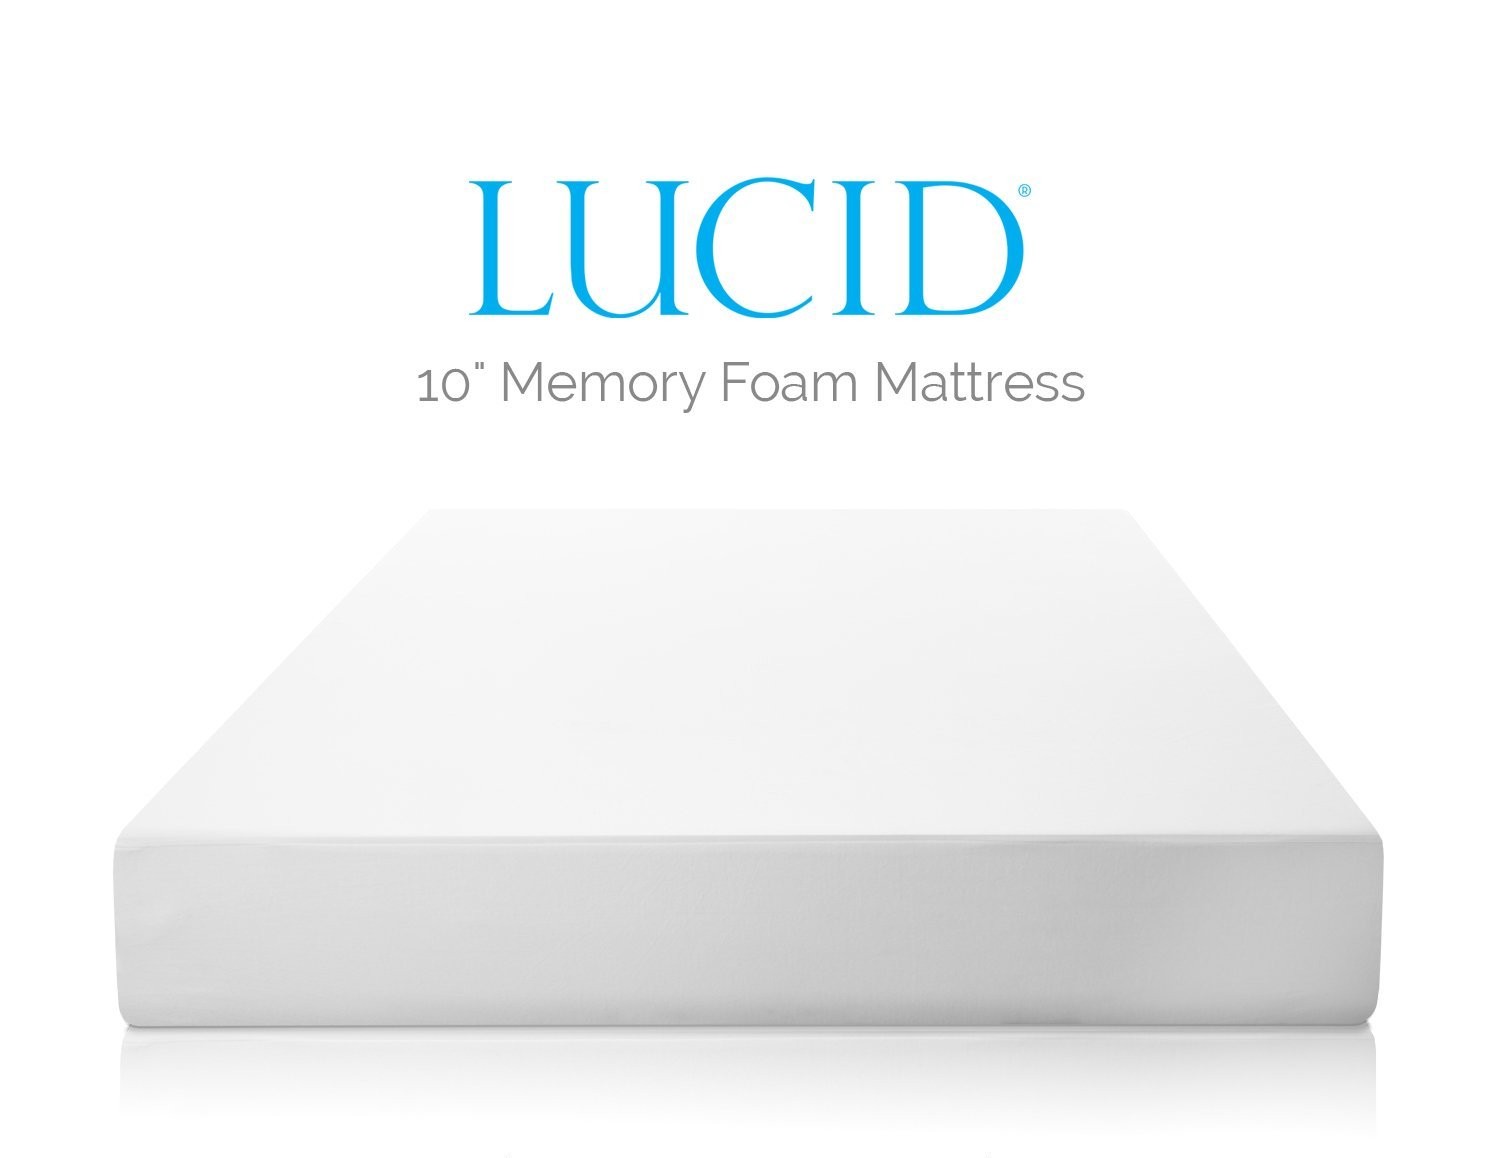 lucid 10 memory foam mattress